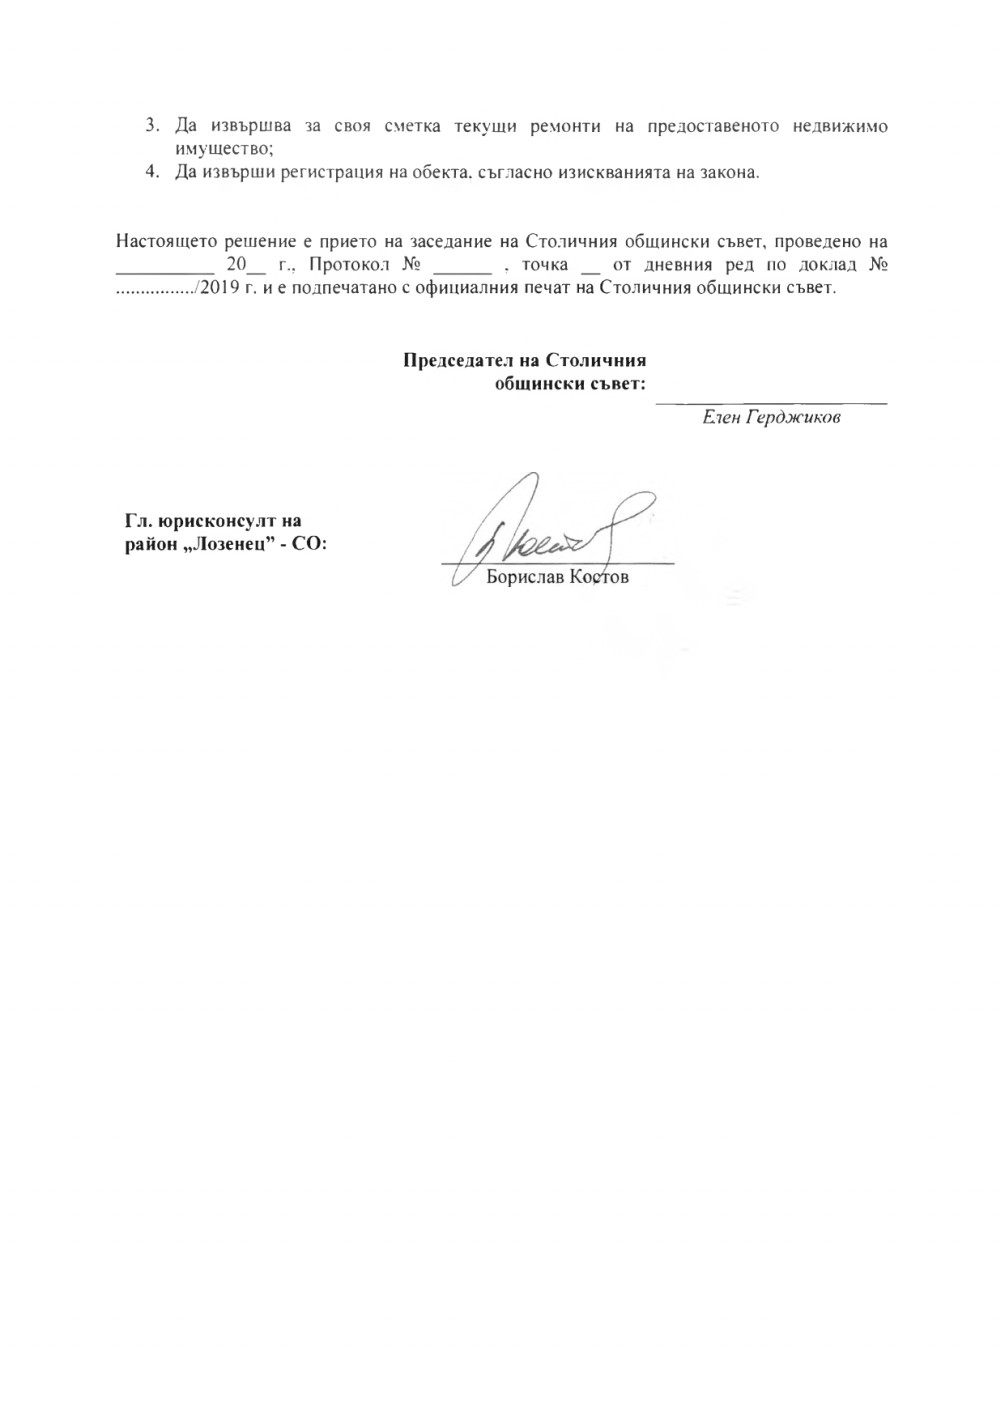 The municipality gives the environmentalists property for free in the Borisova gradina - Снимка 5